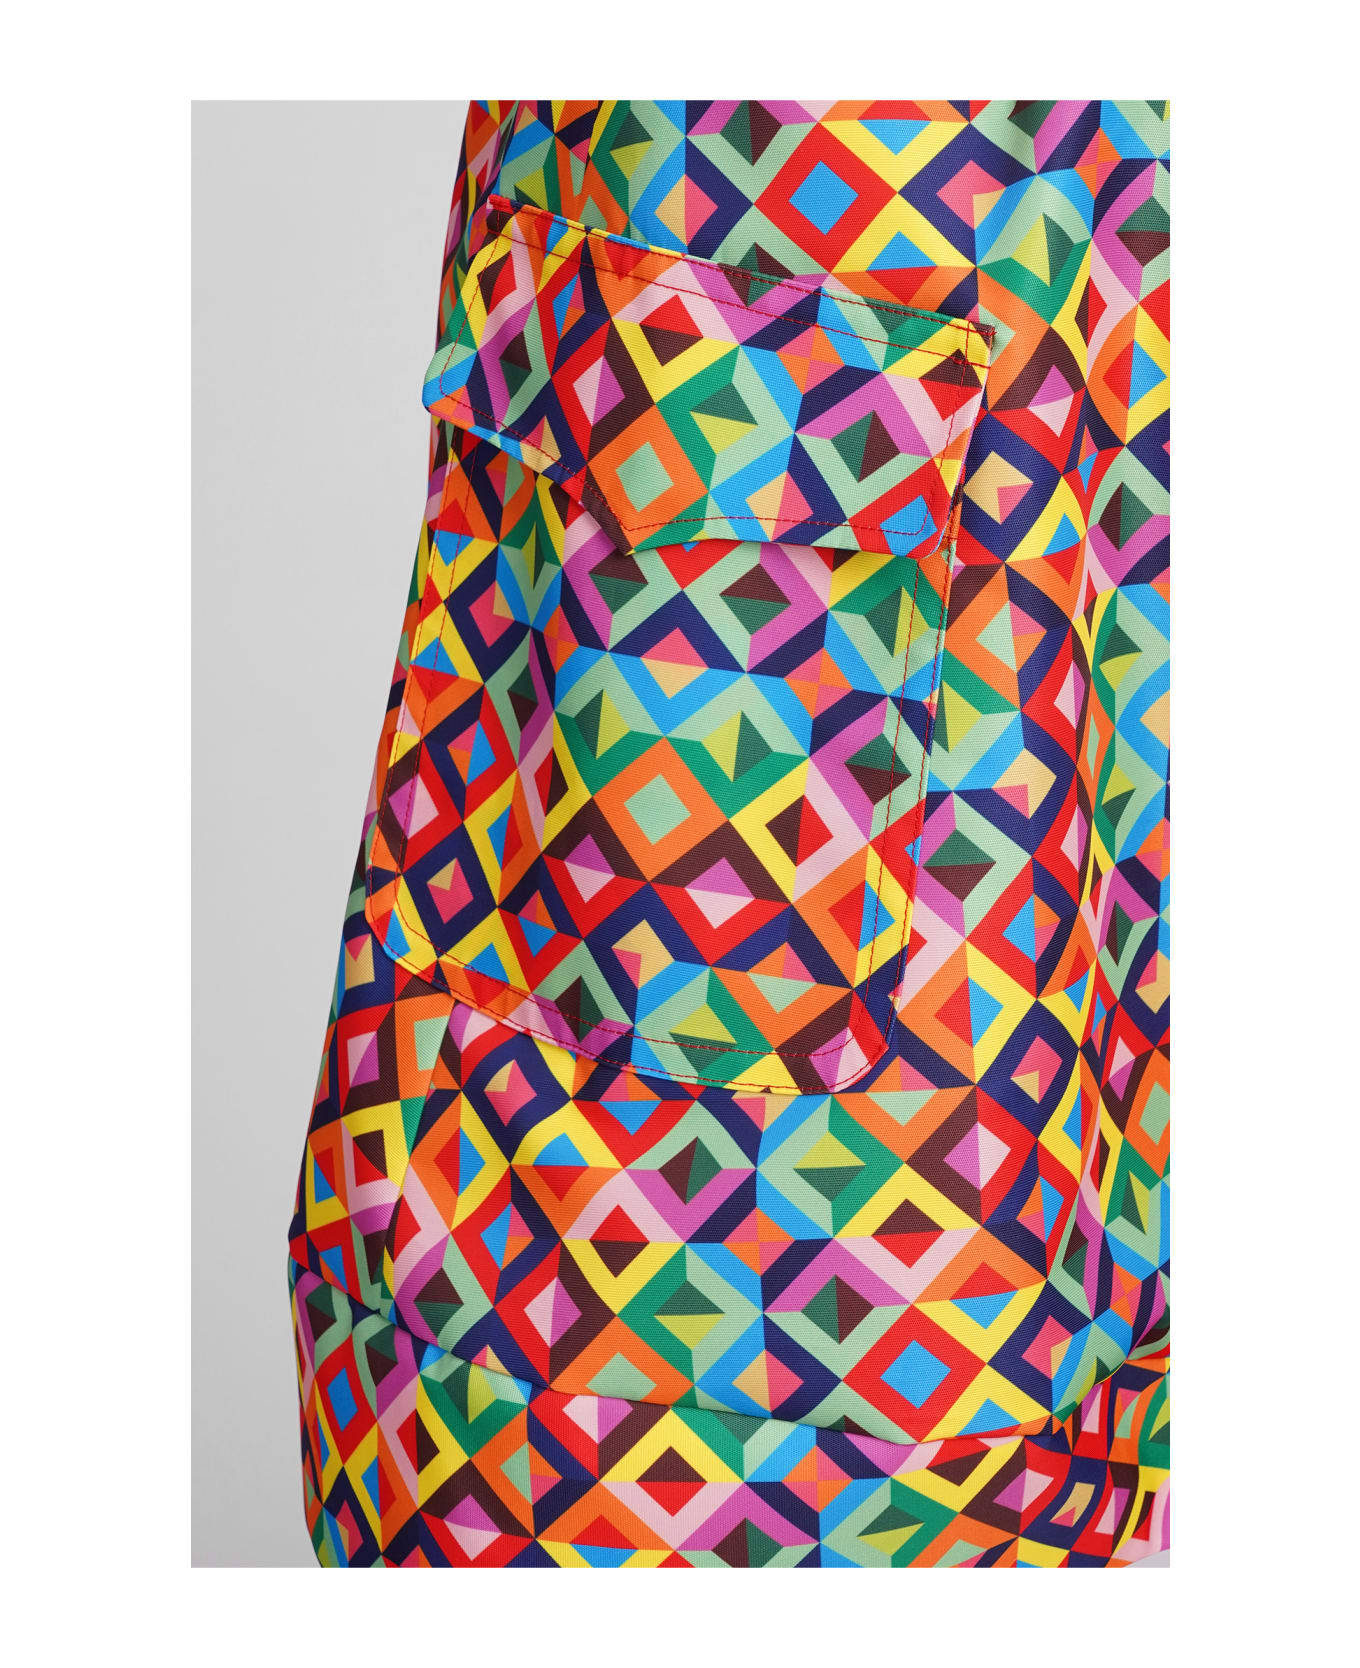 Comme des Garçons Skirt In Multicolor Polyester - multicolor スカート